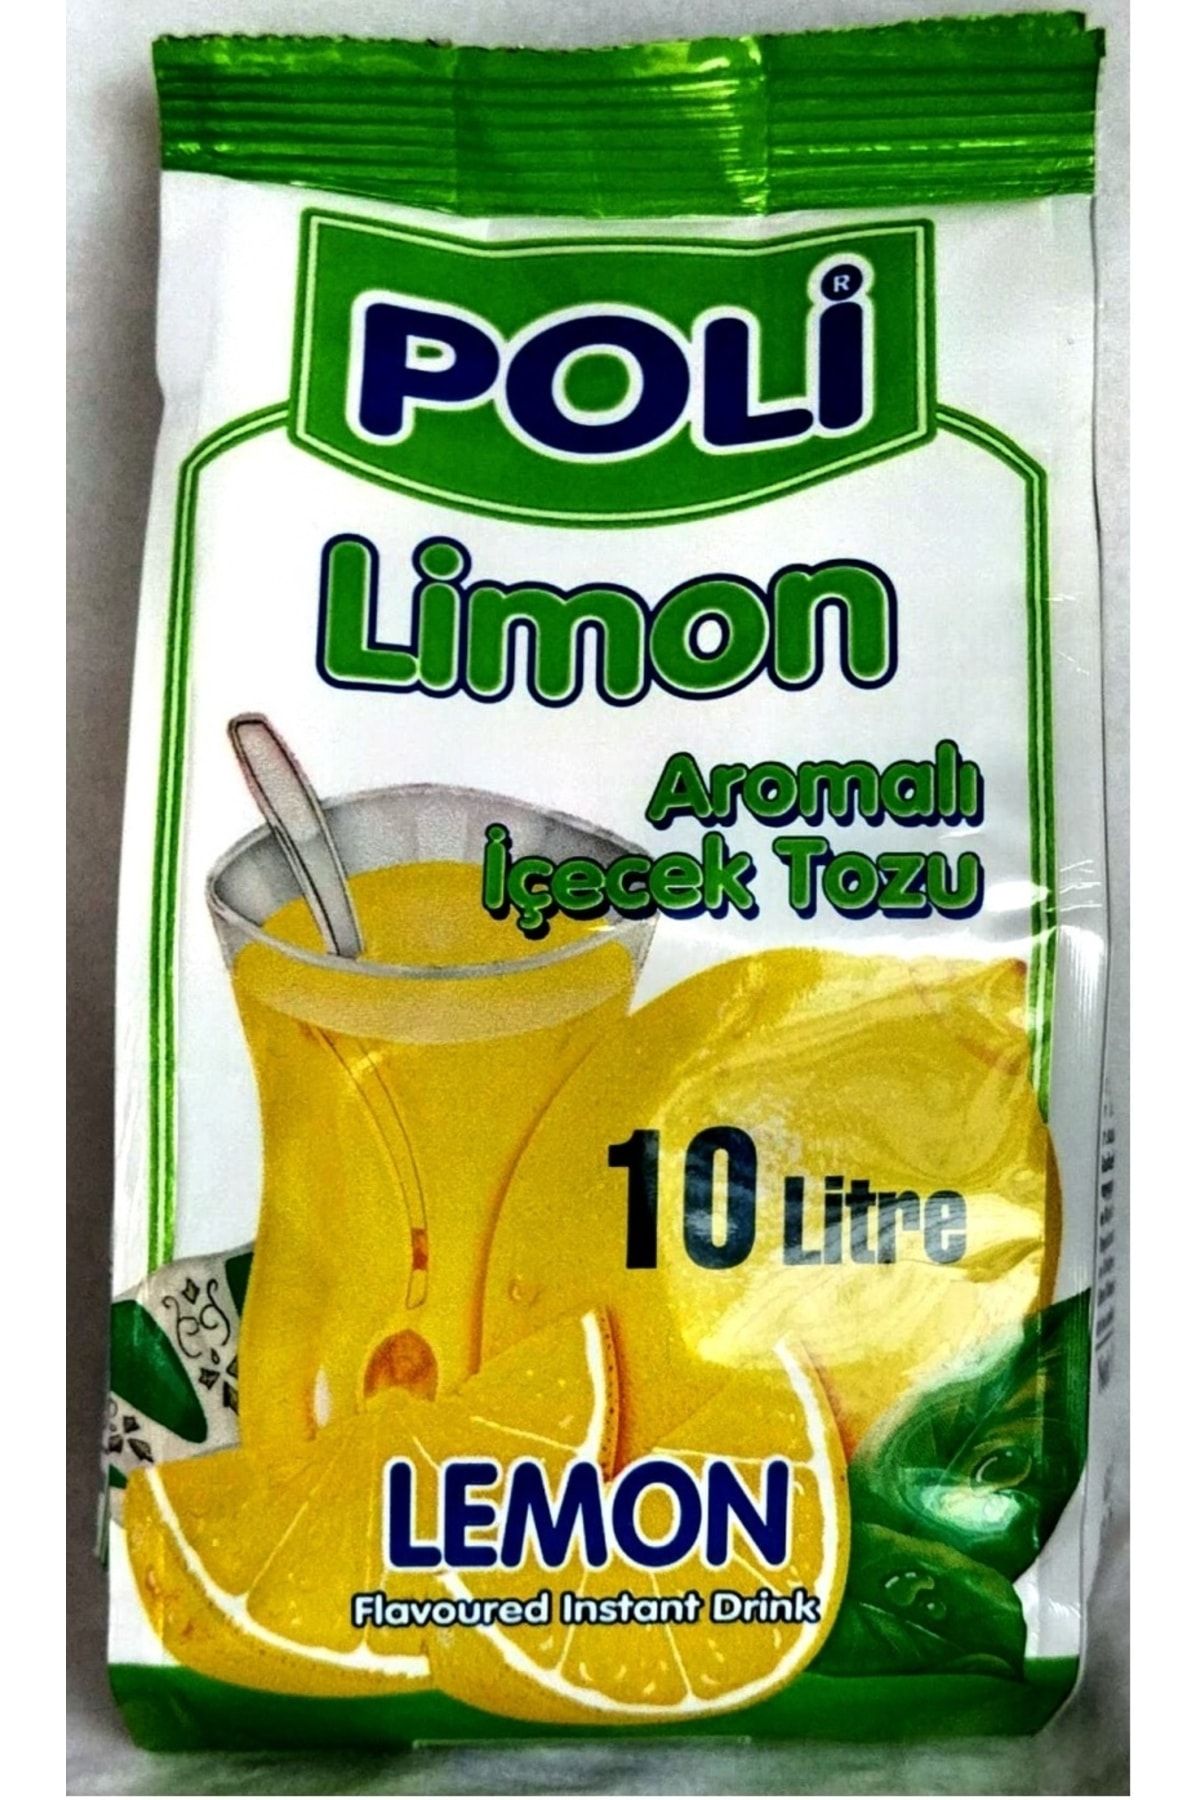 Poli Limon Aromalı Içecek Tozu - 10litre - Soğuk Limonata - Limonata Tozu